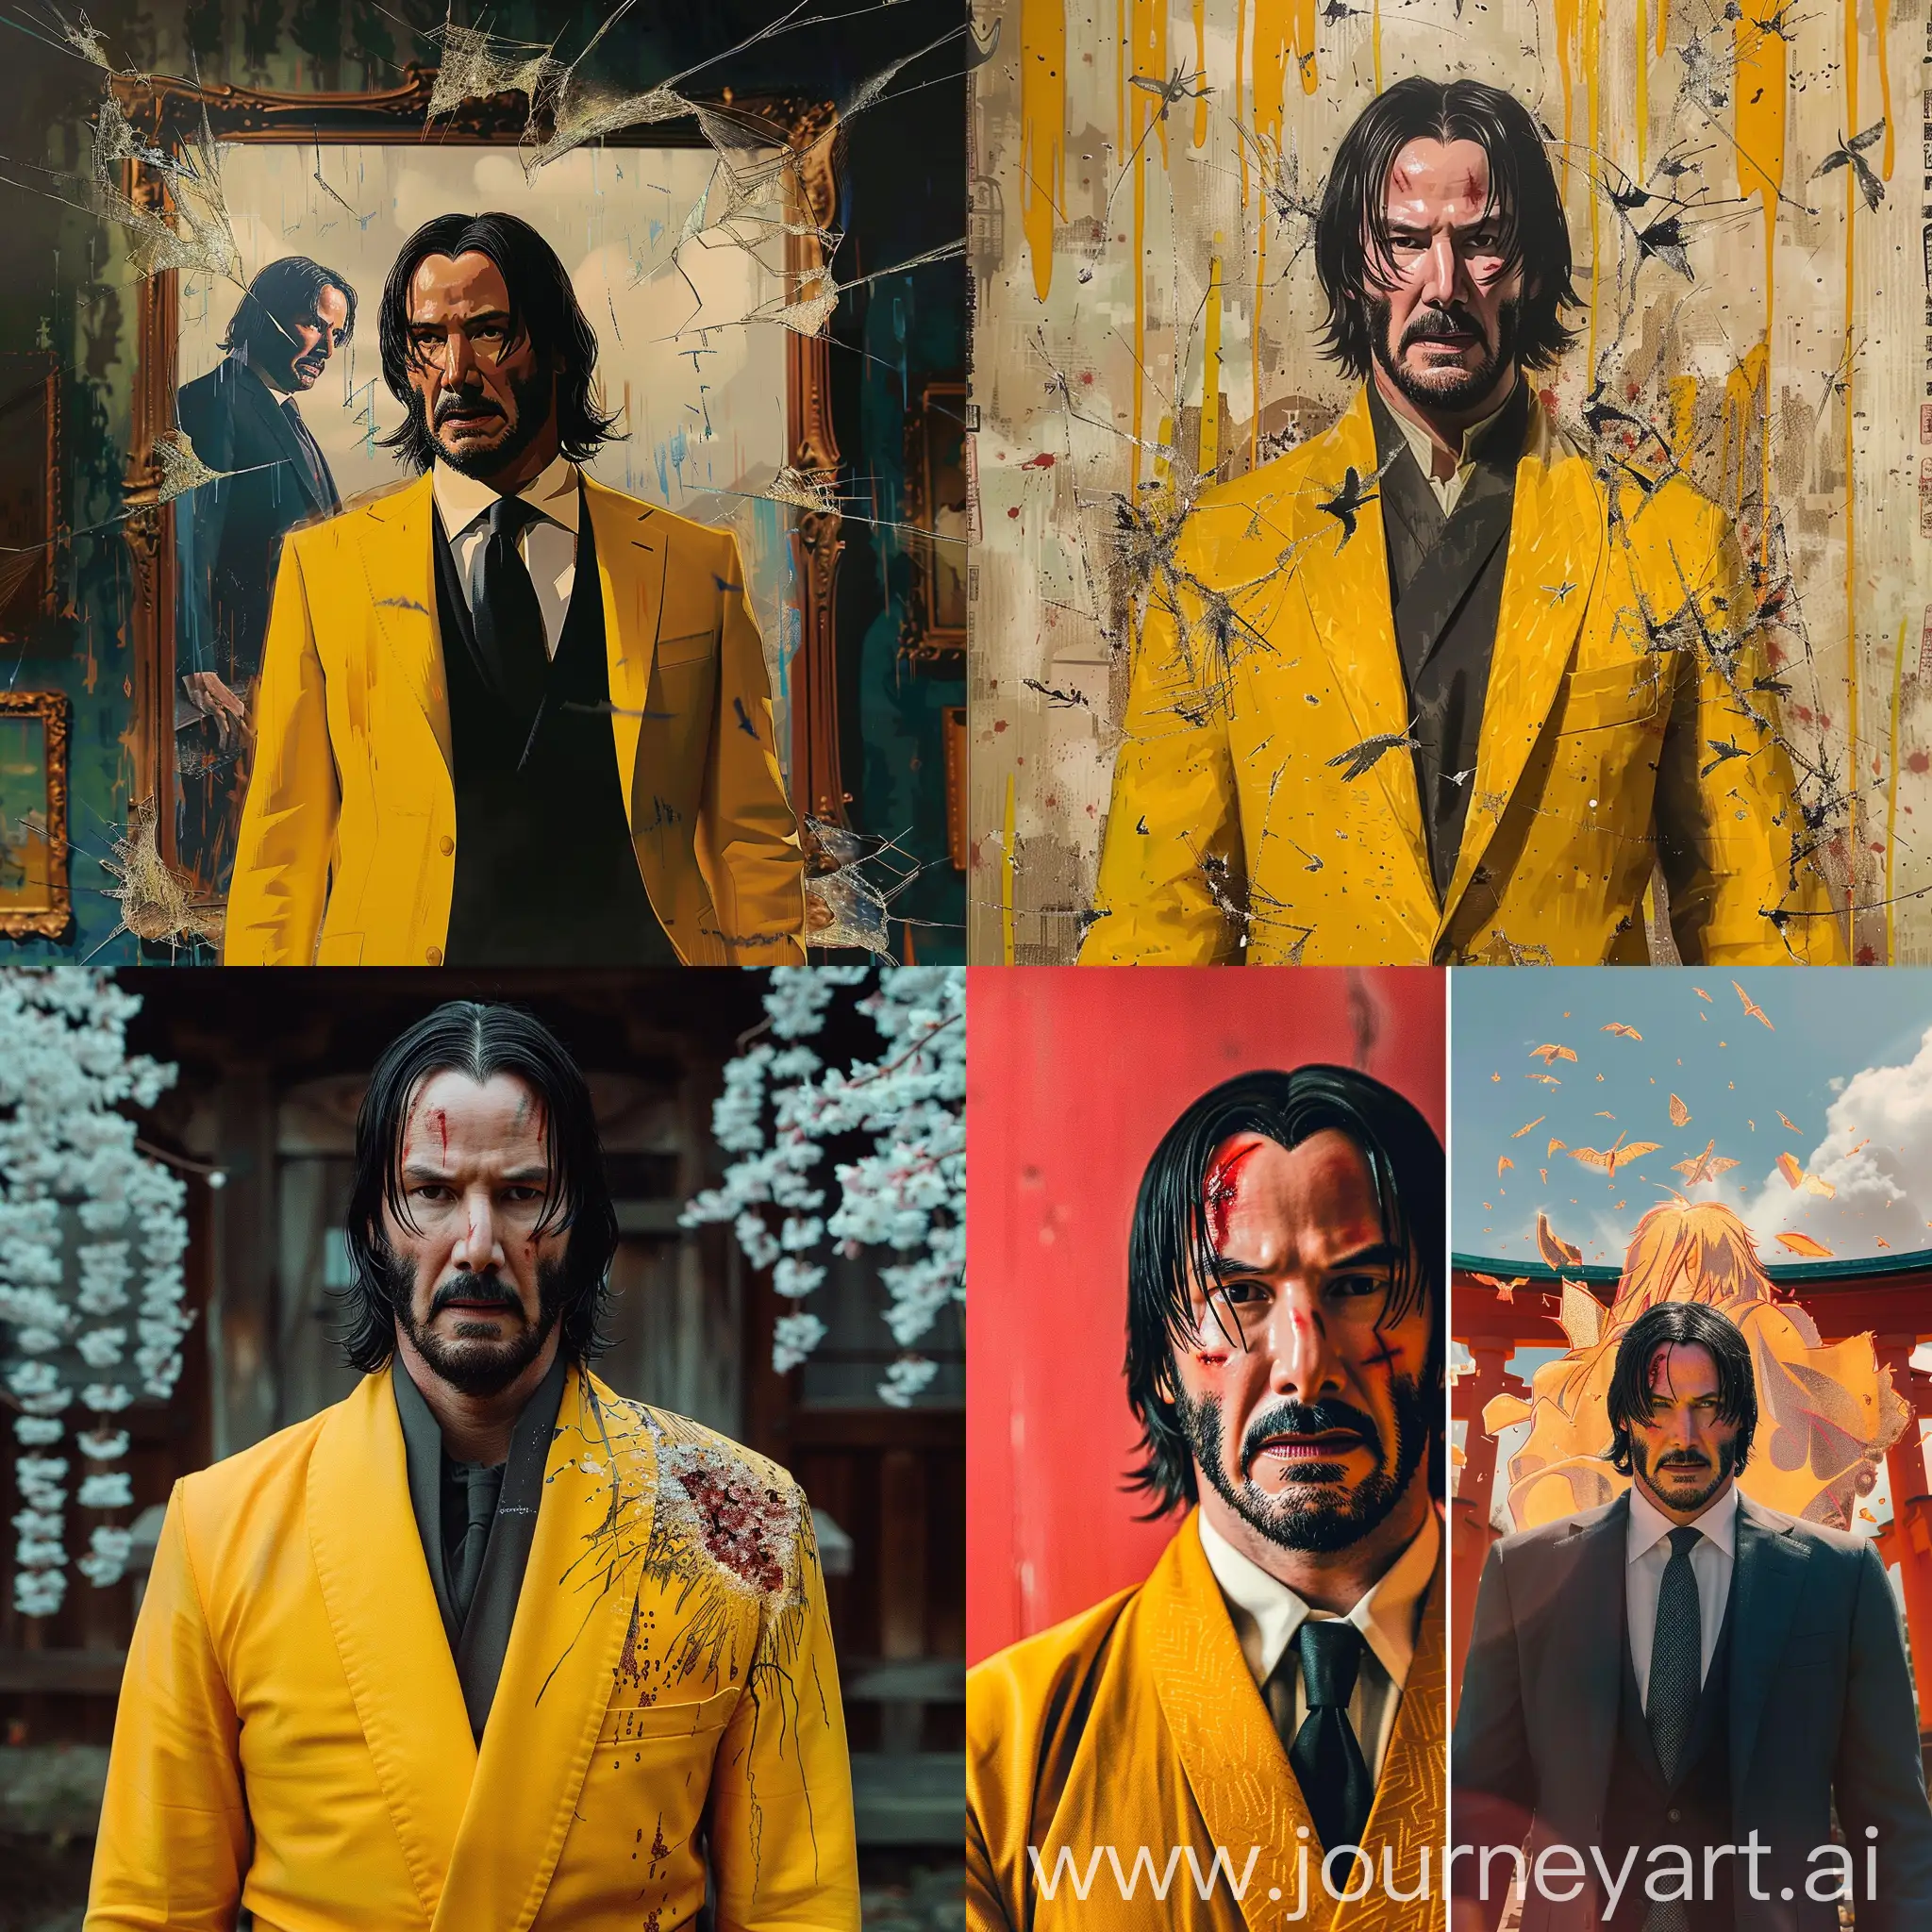 John-Wick-Portrait-in-Studio-Ghibli-Style-with-Yellow-Costume